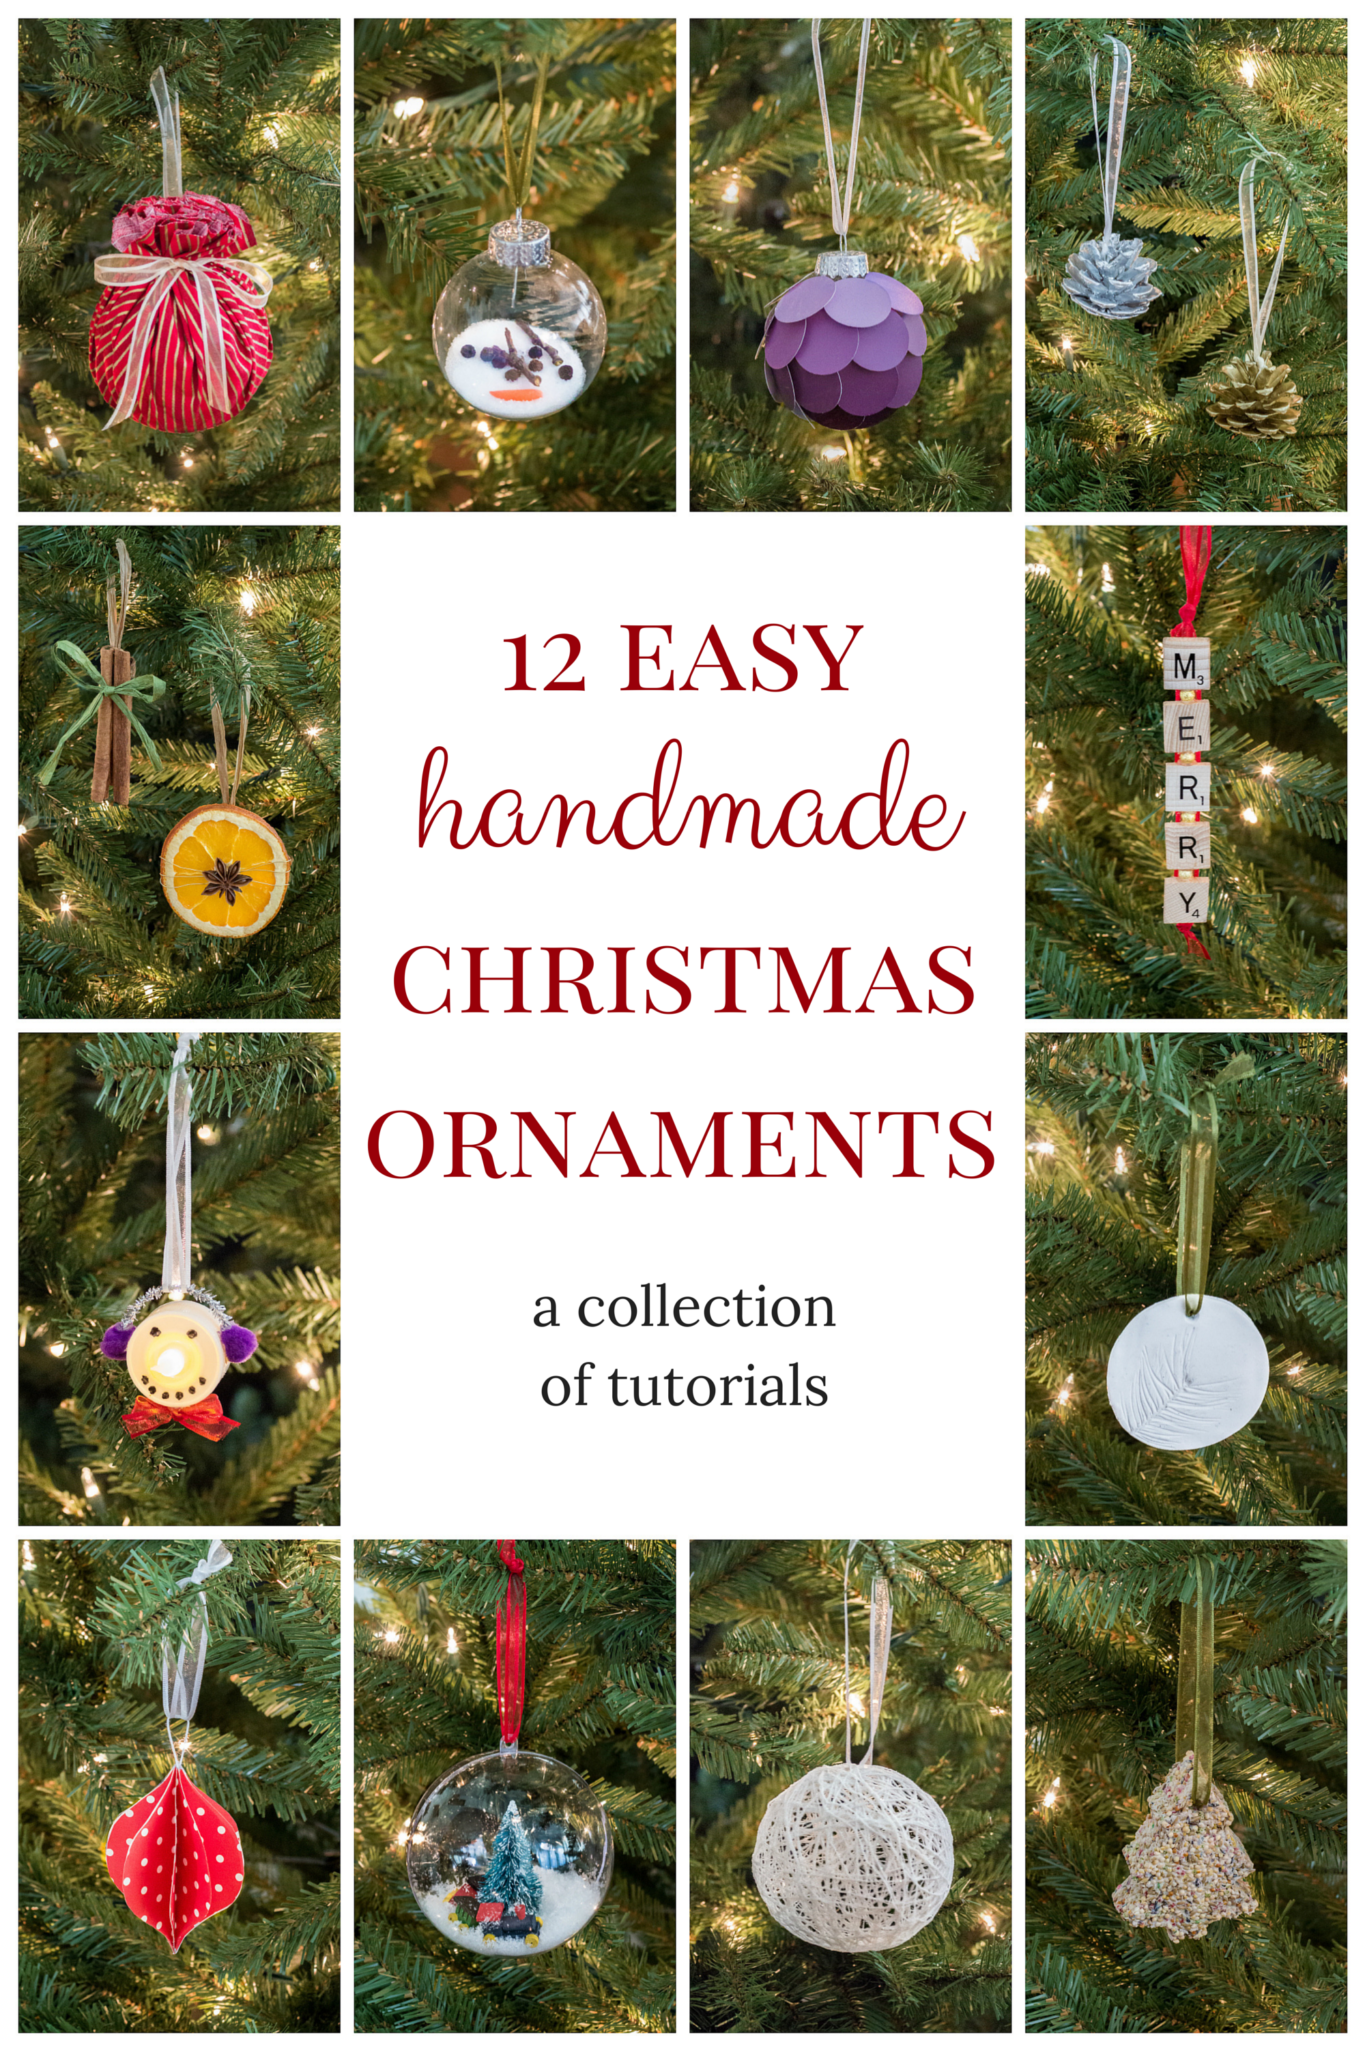 12 Easy Handmade Christmas Ornaments
